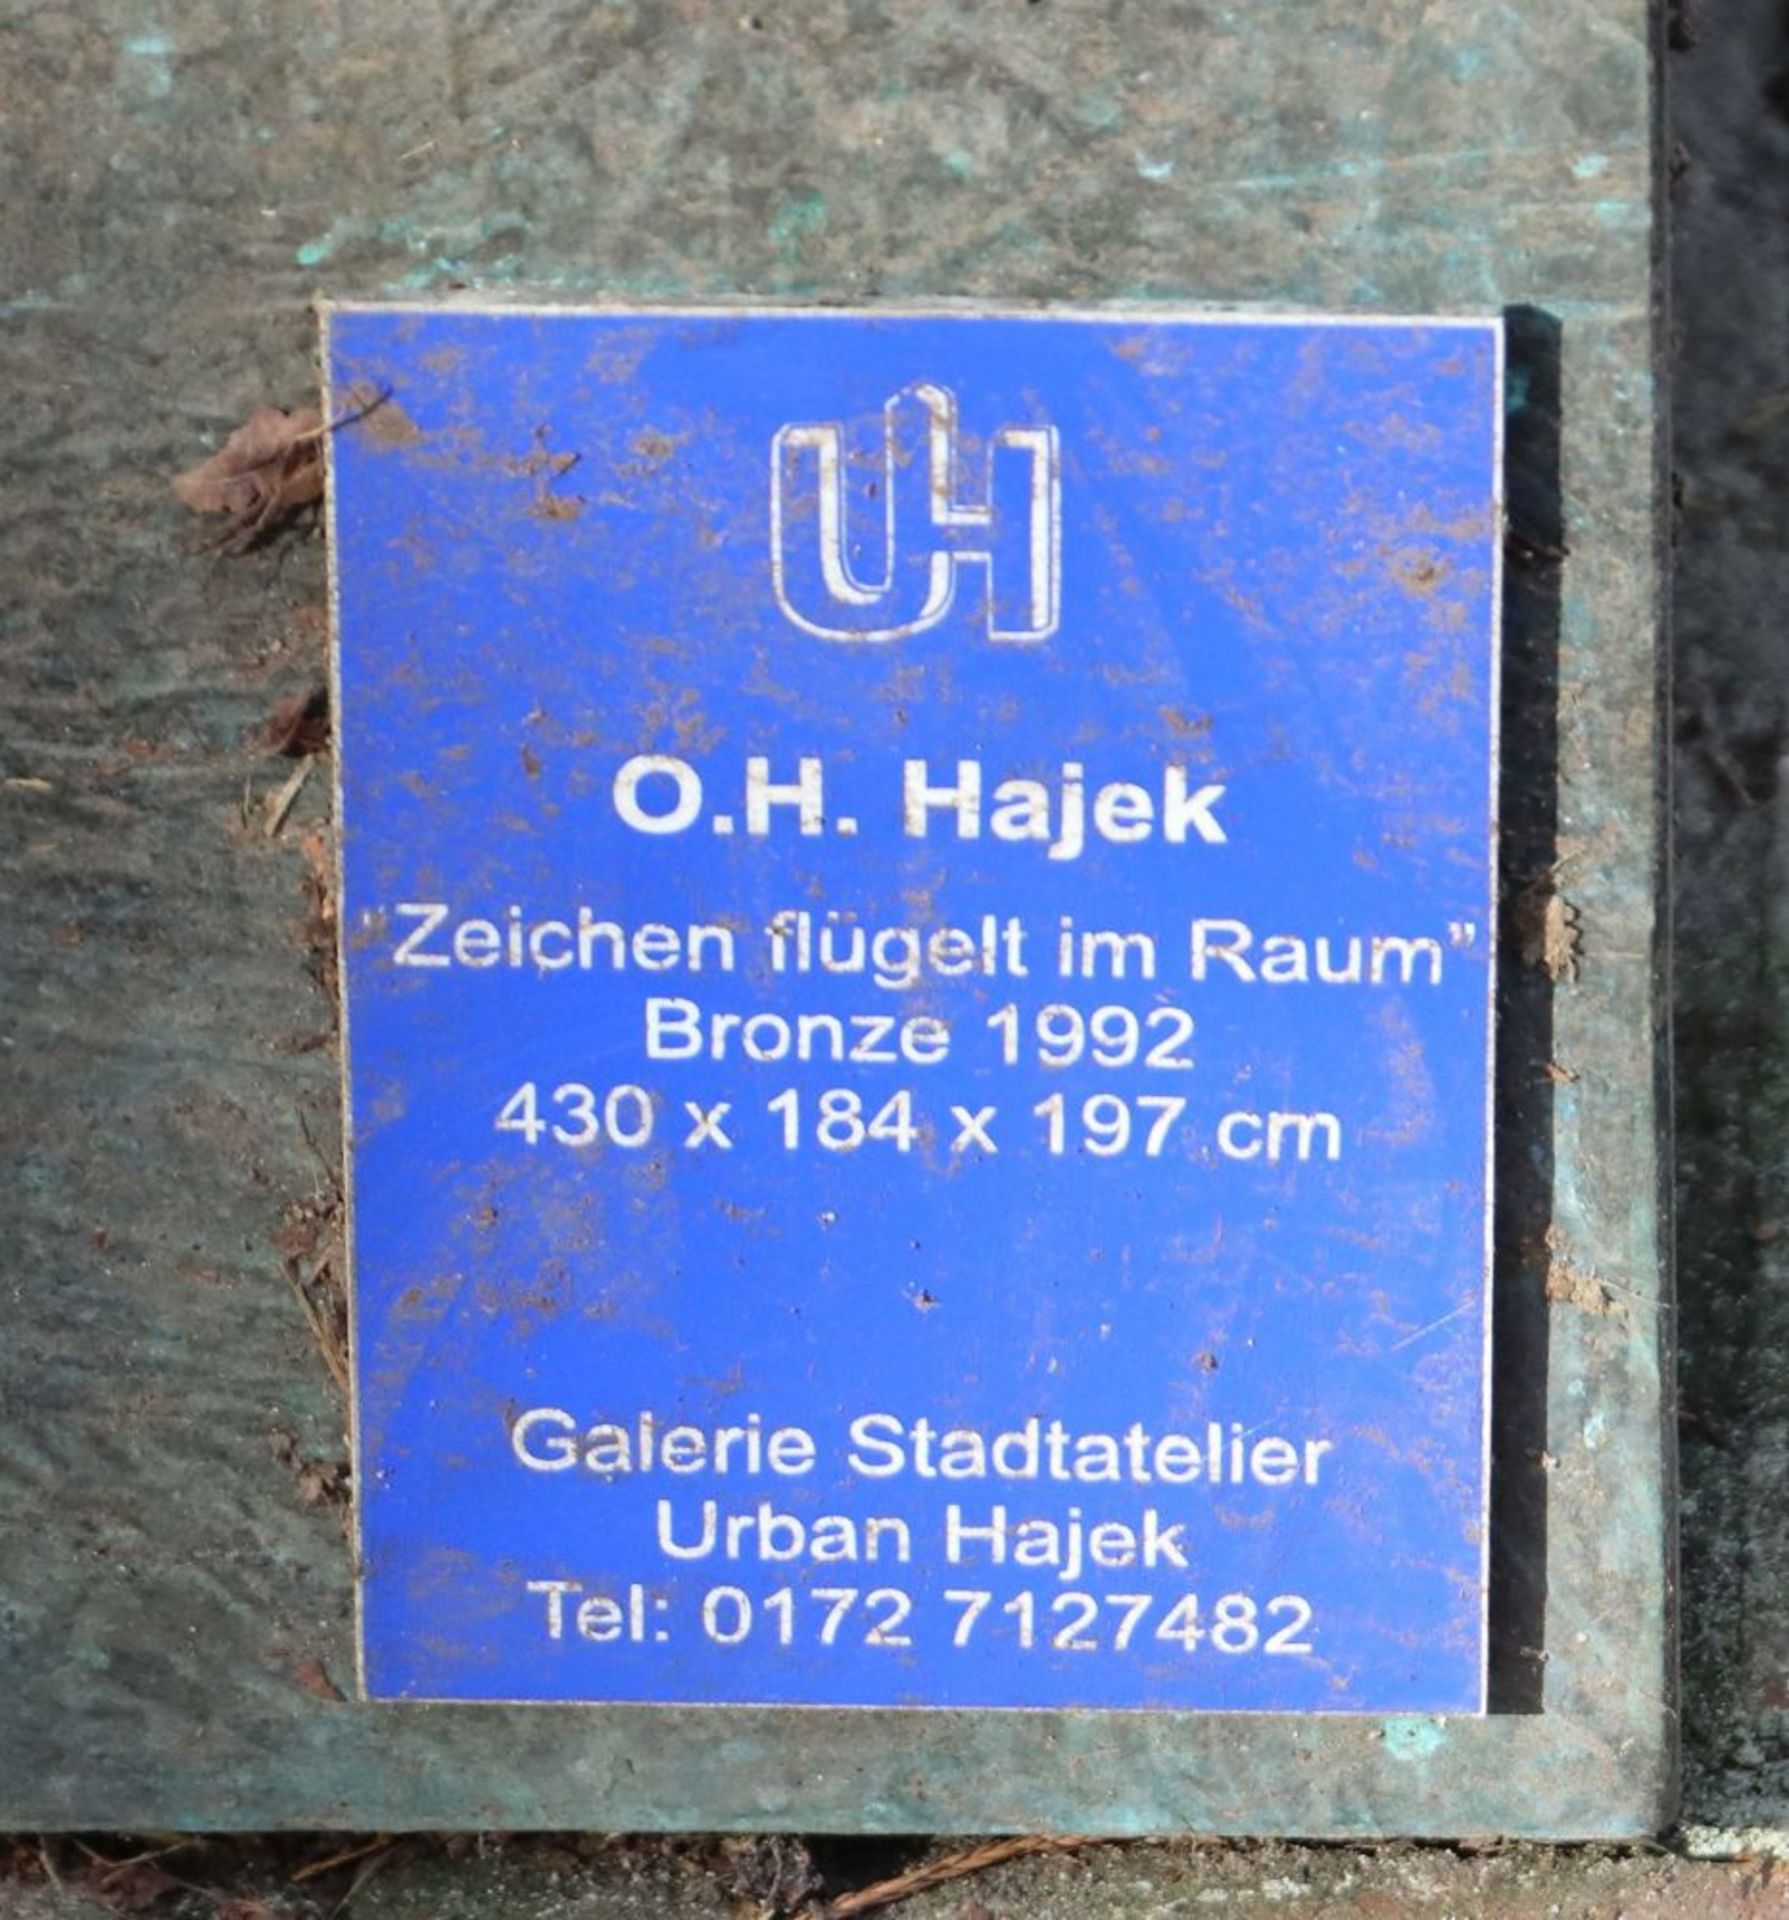 Hajek, Prof. Otto Herbert Kaltenbach / - Image 5 of 7